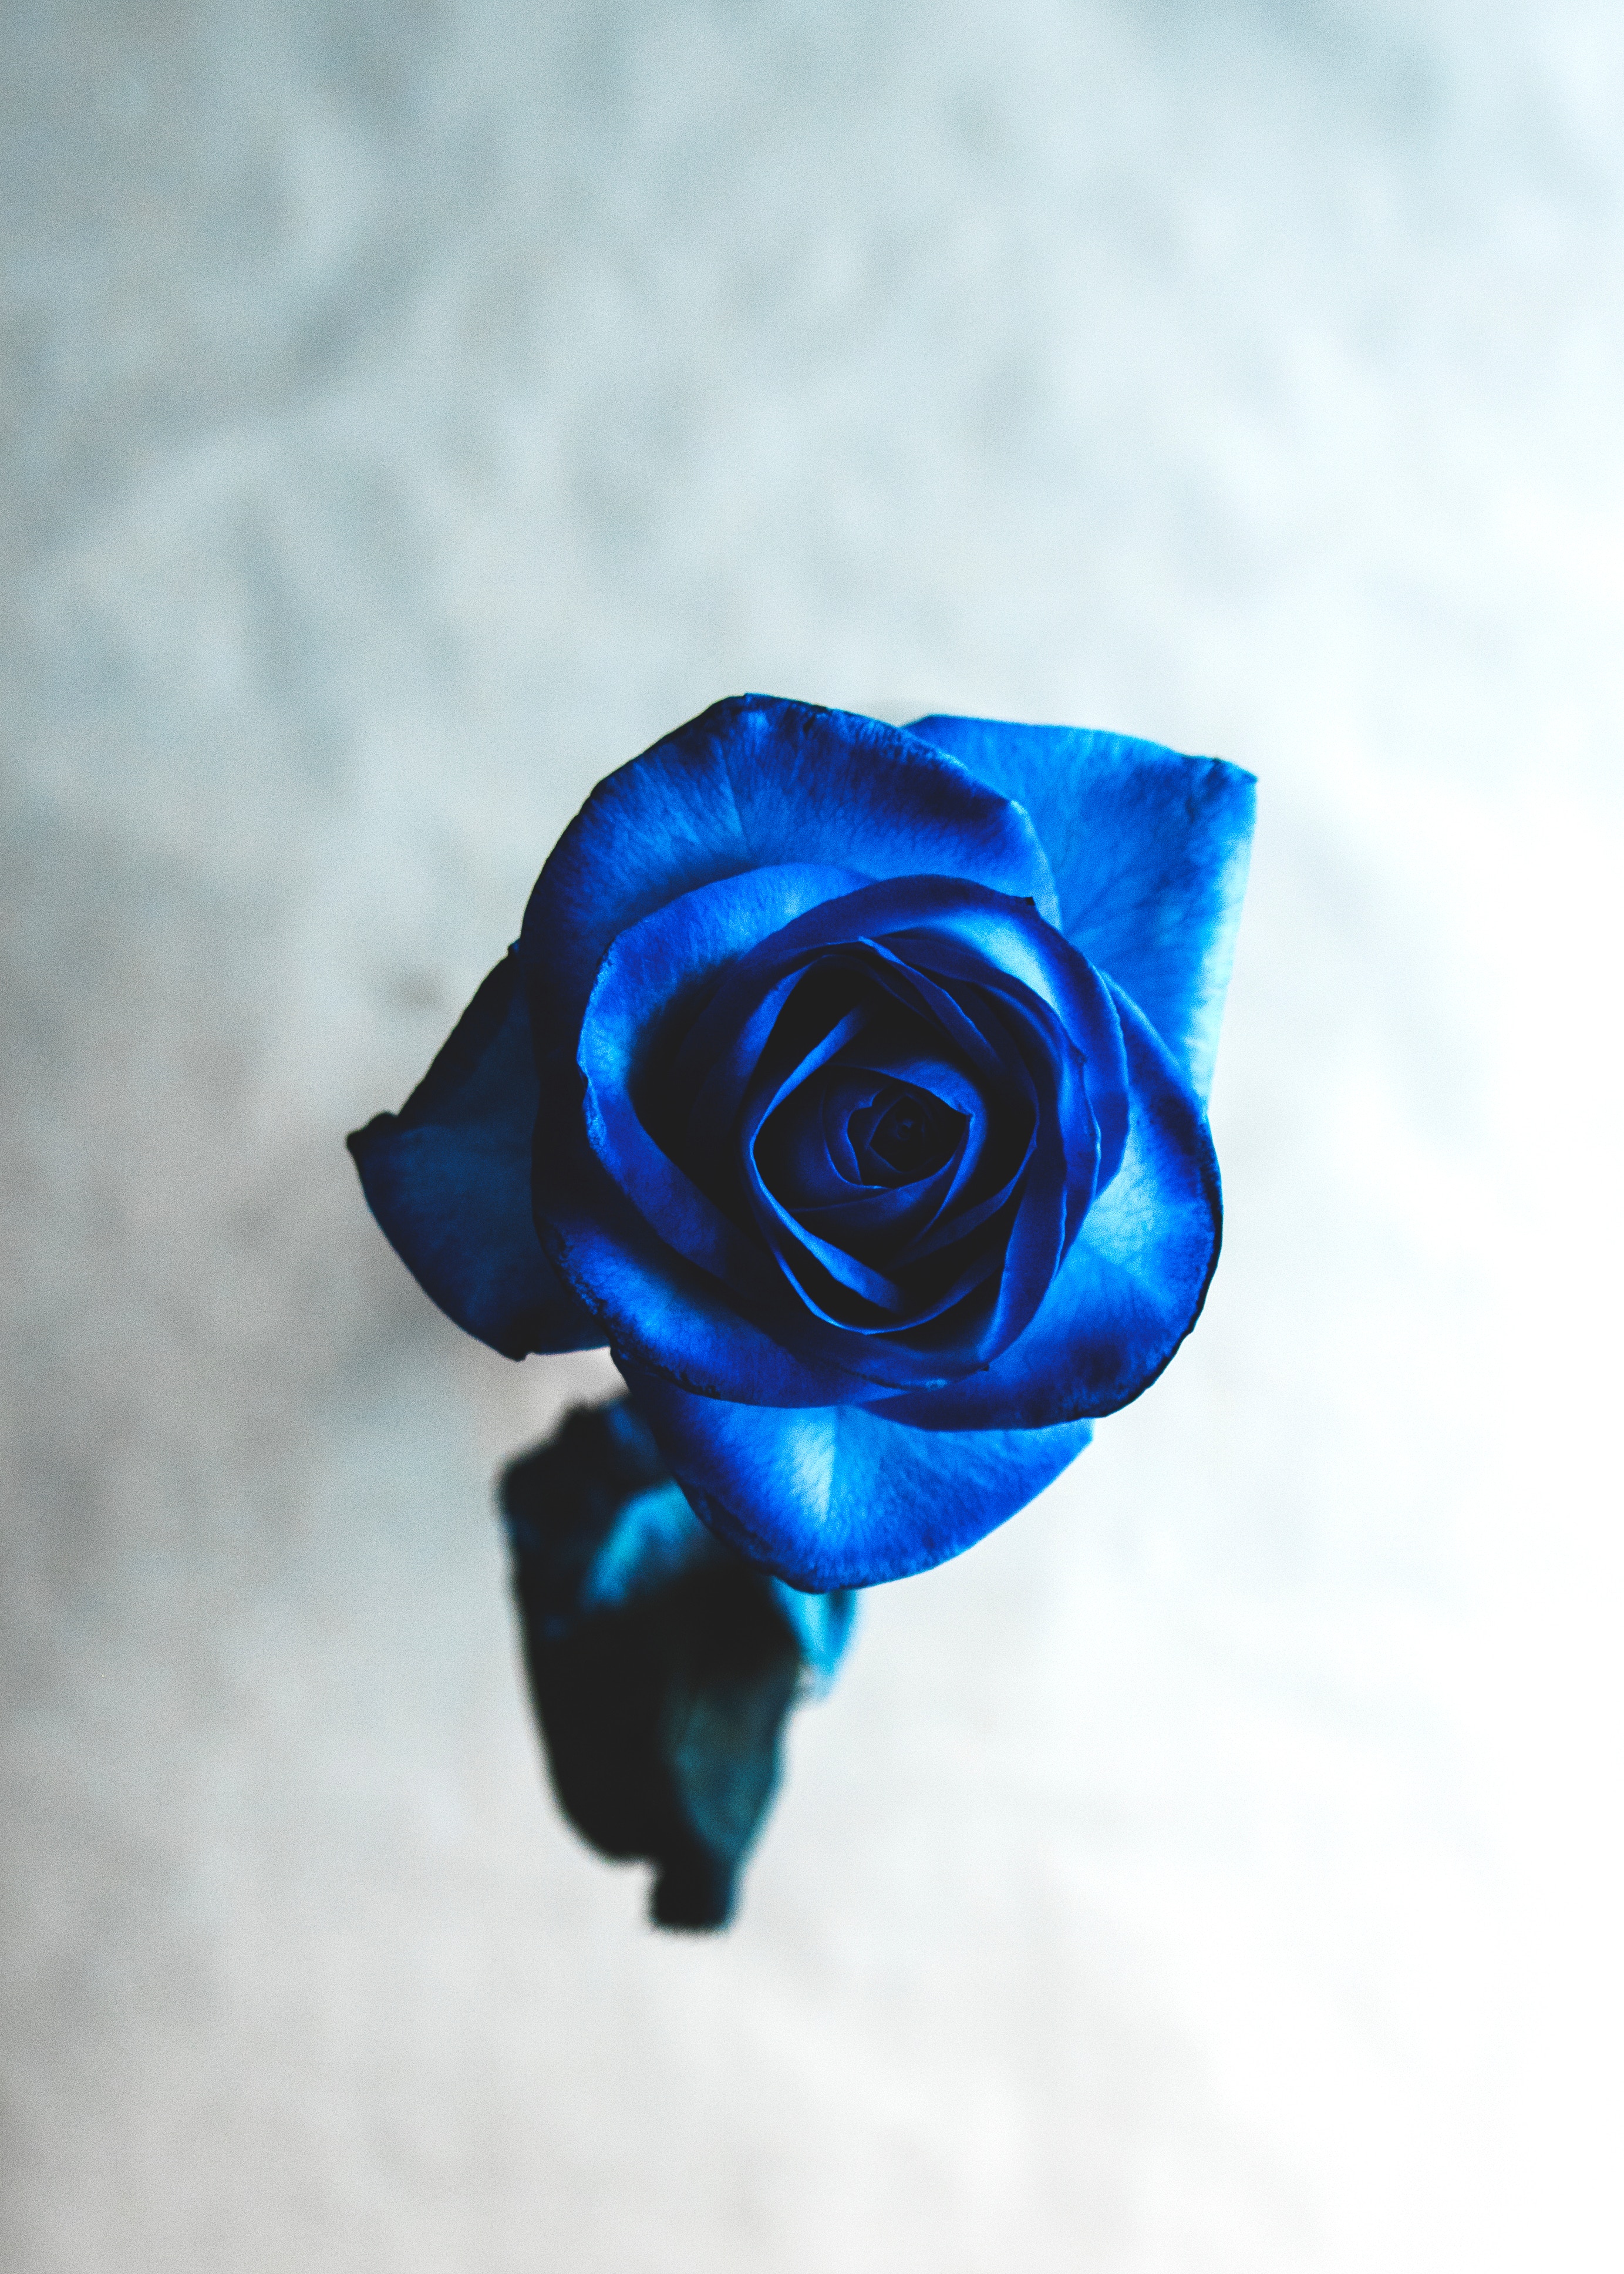 rose flower, flowers, blue, flower, rose, bud, blur, smooth